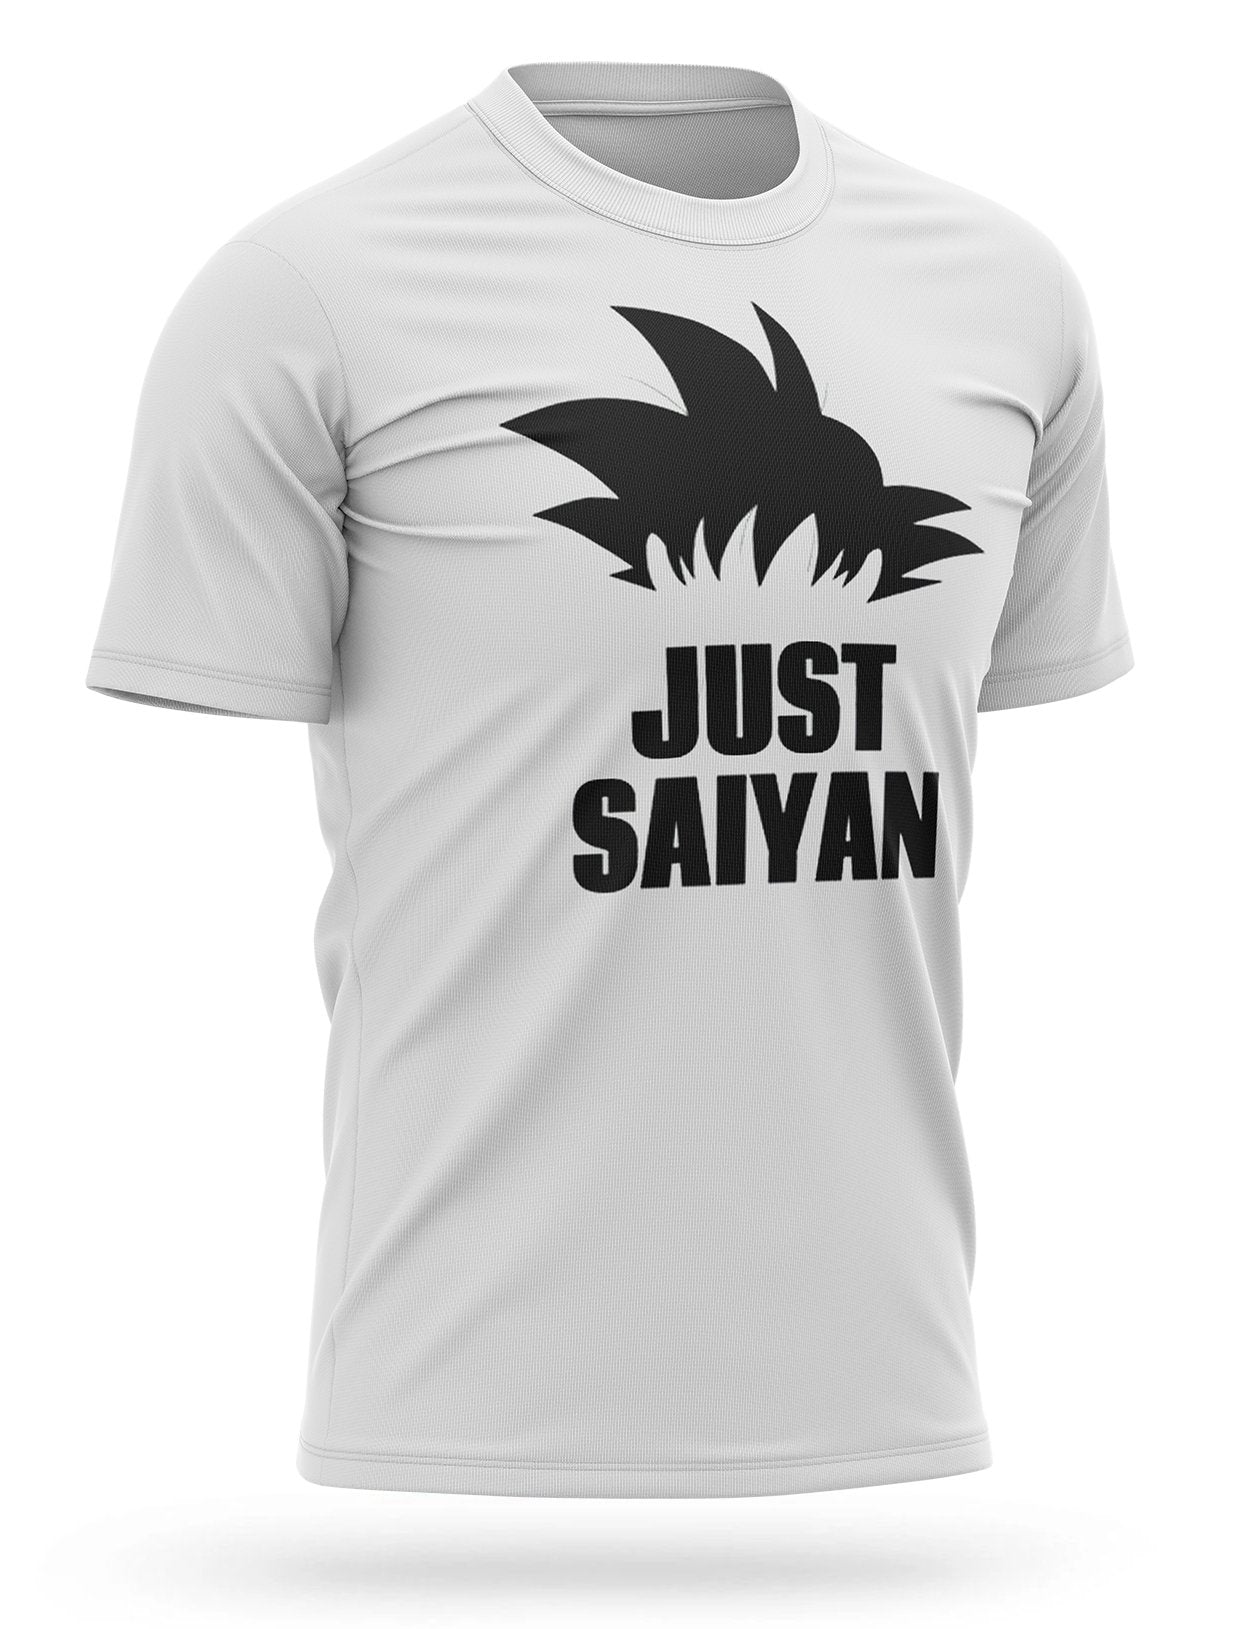 Tee Shirt Just Saiyan